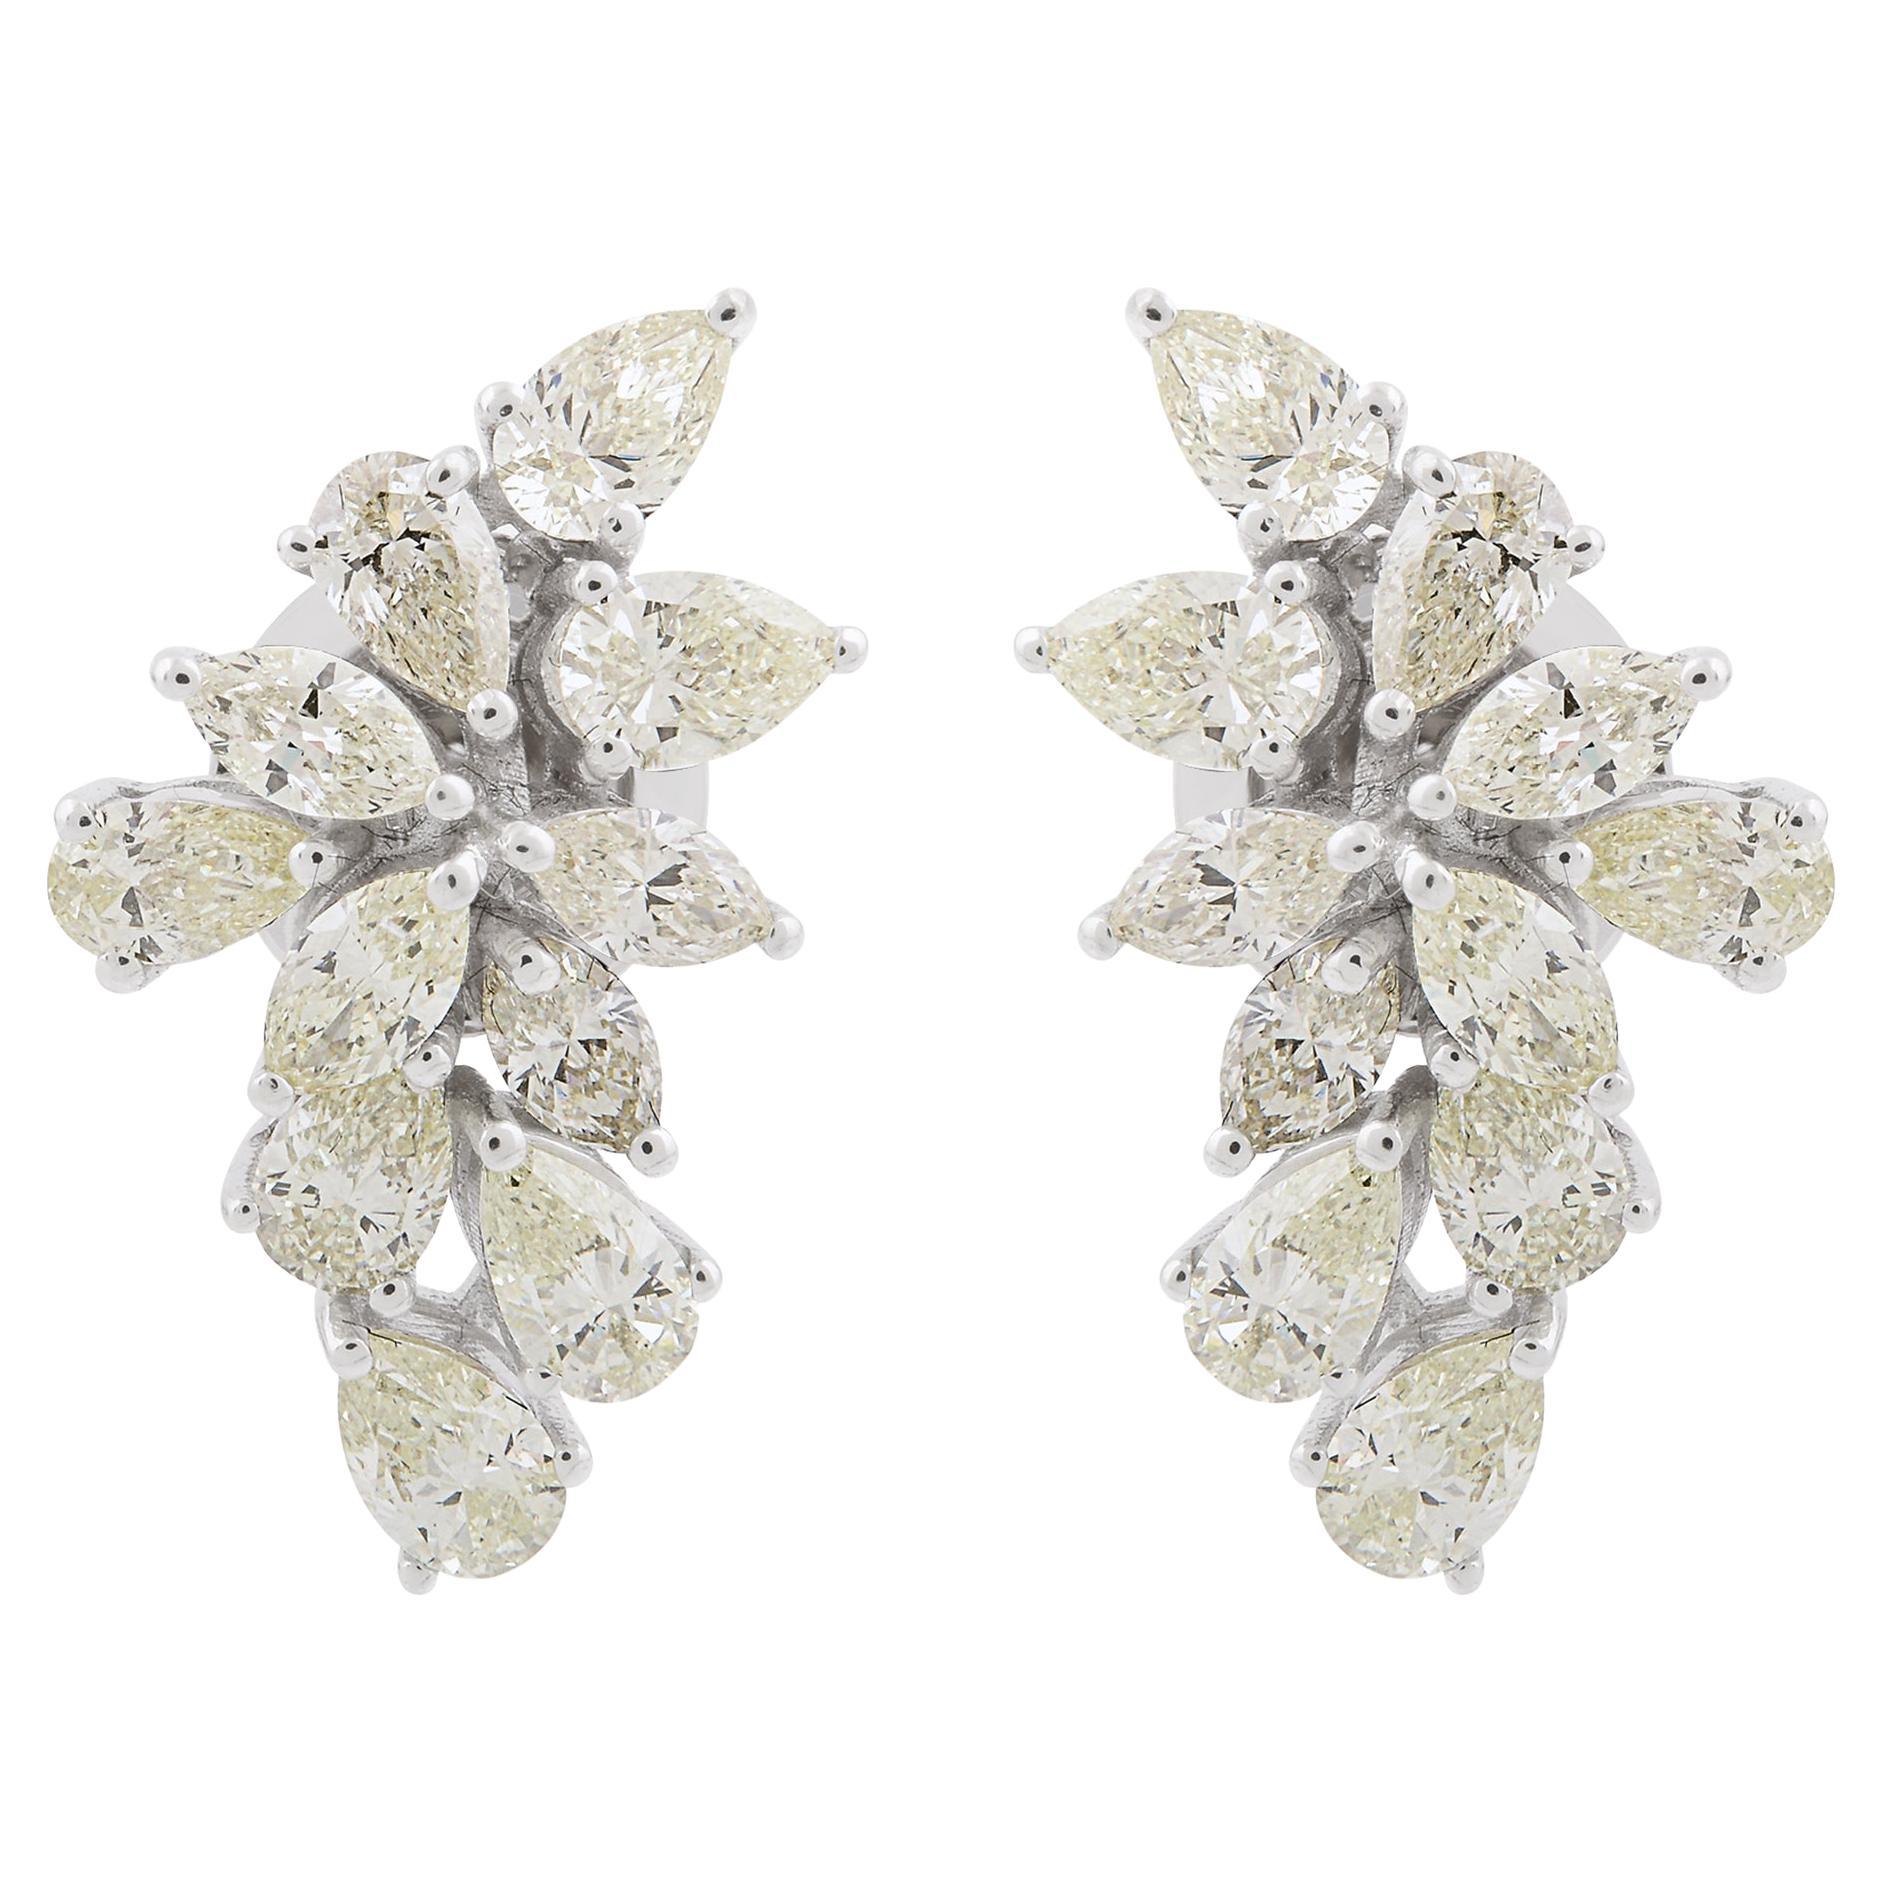 1.86 Carat Pear Marquise Diamond Earrings 18 Karat White Gold Handmade Jewelry